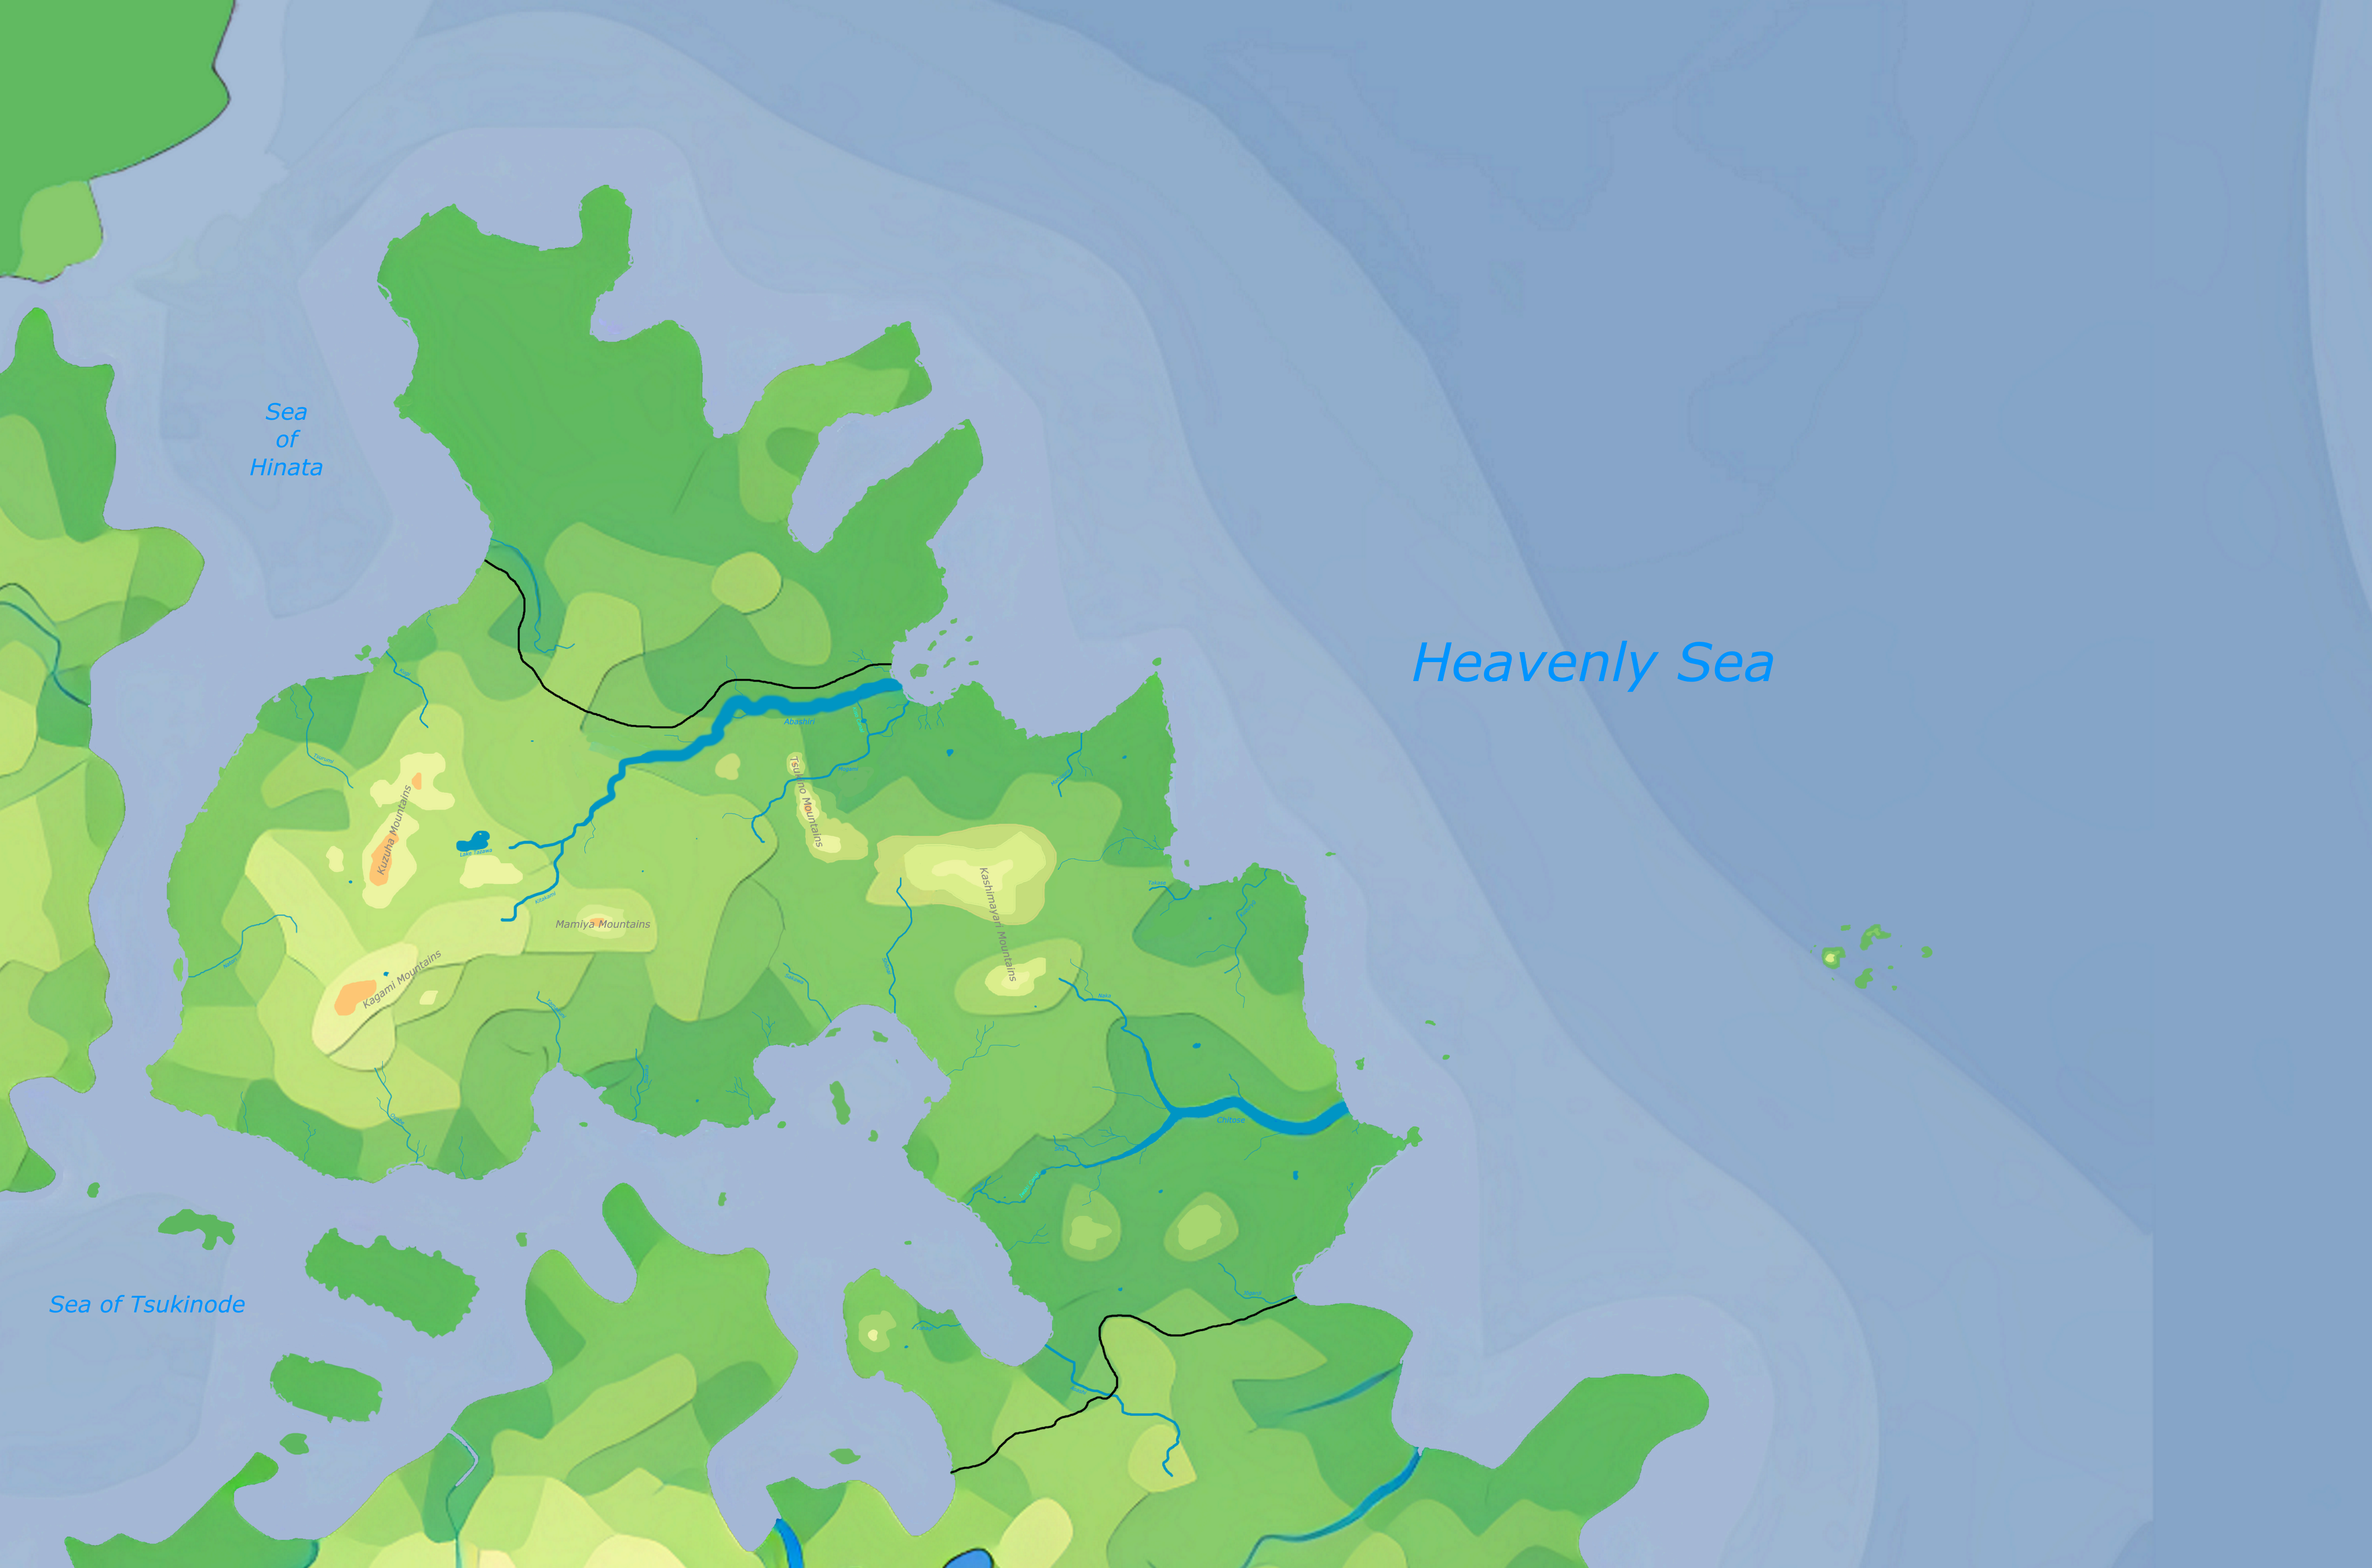 Topography of Tsukinode